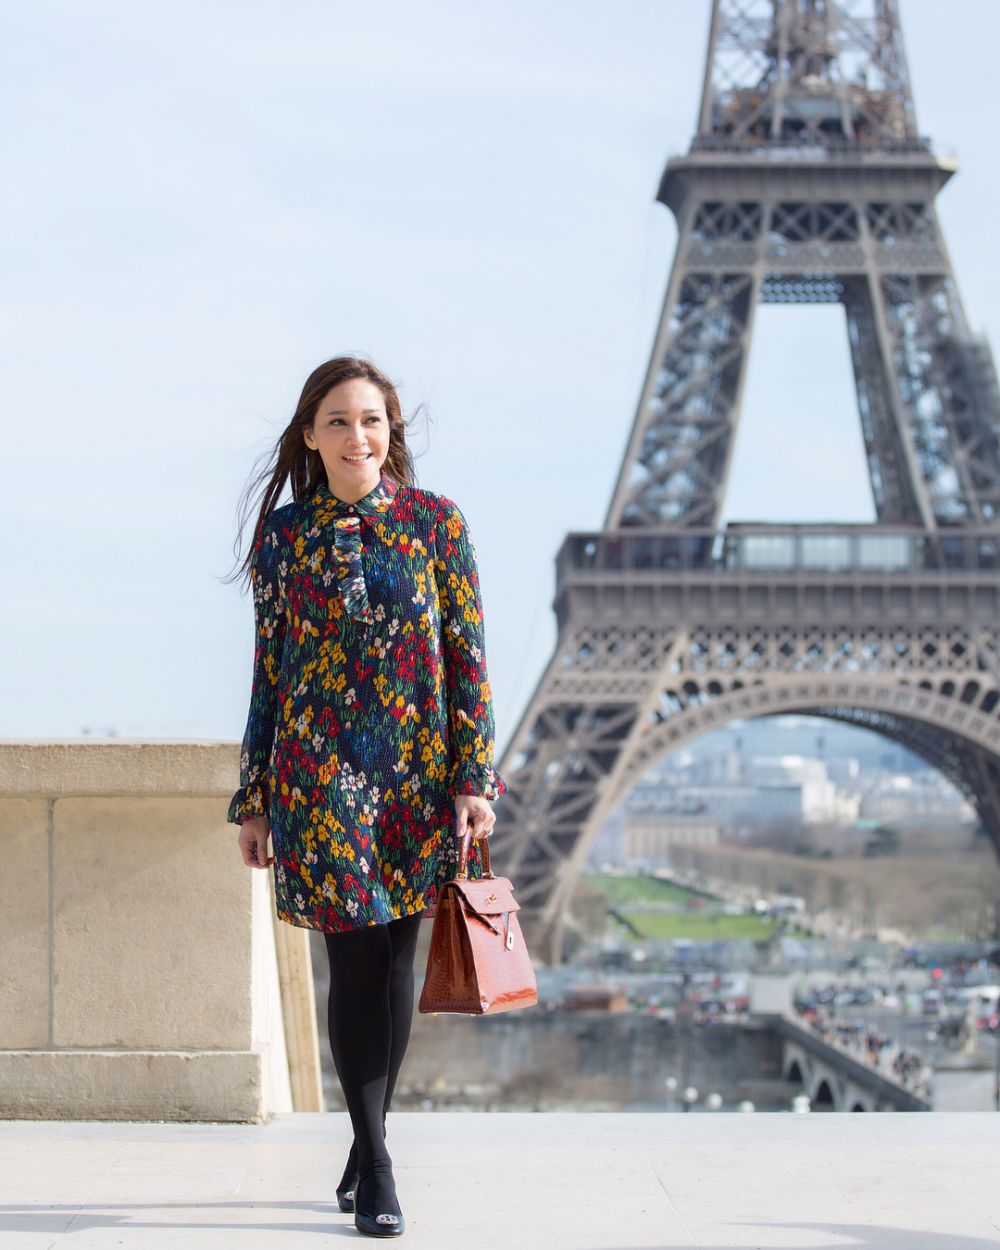 10 Gaya super stylist Maia Estianty liburan di Paris, tampil cetar